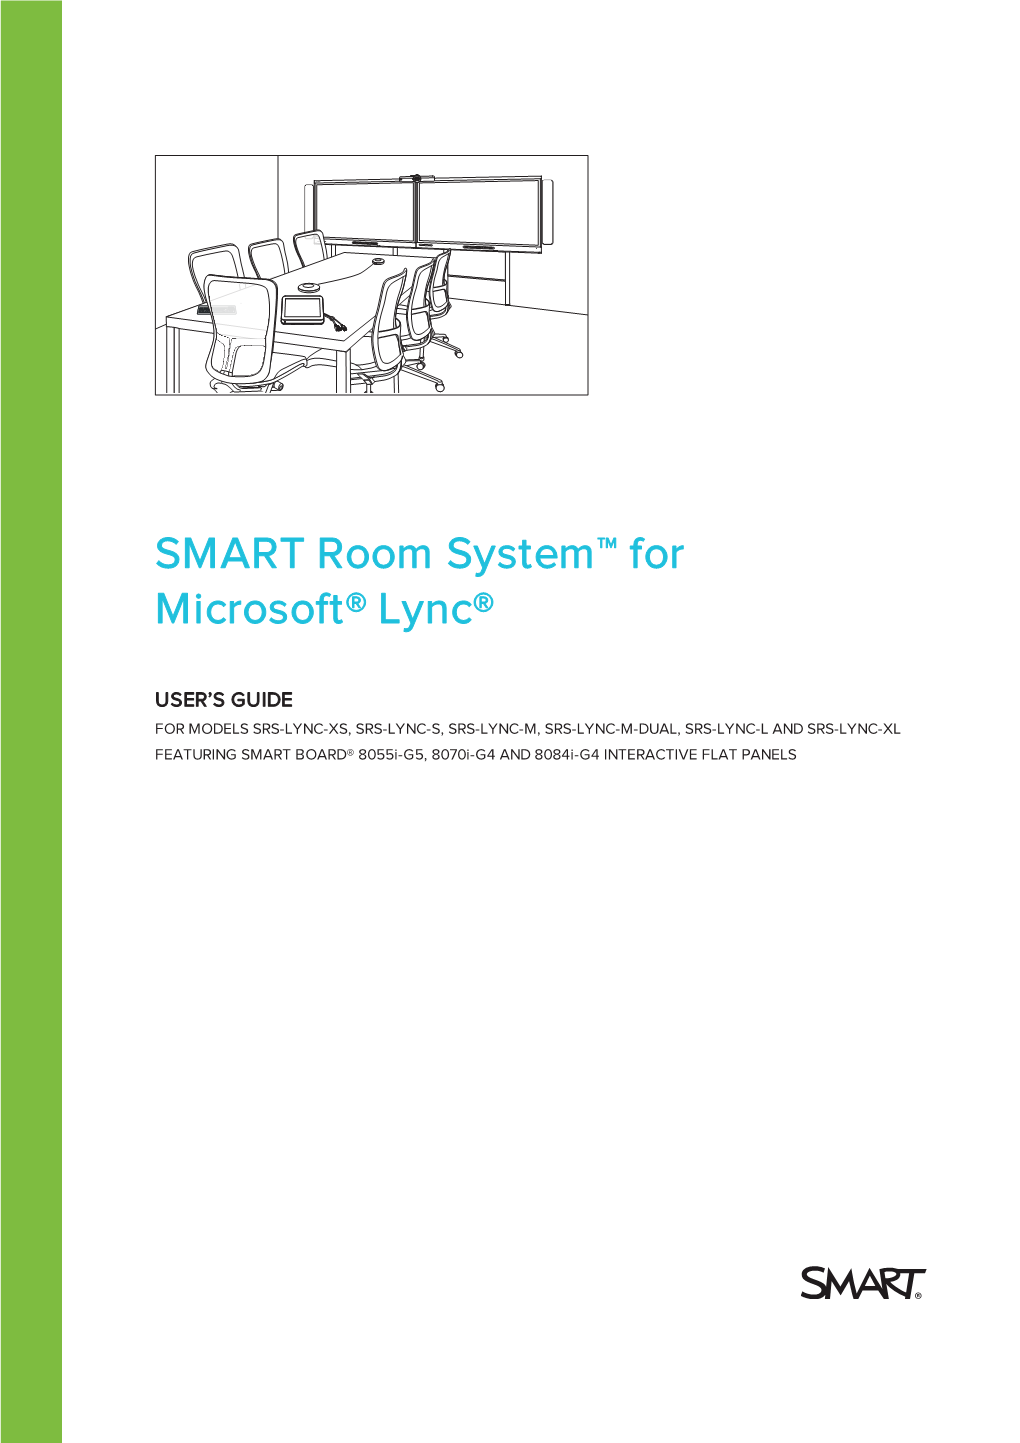 SMART Room System for Microsoft Lync User's Guide